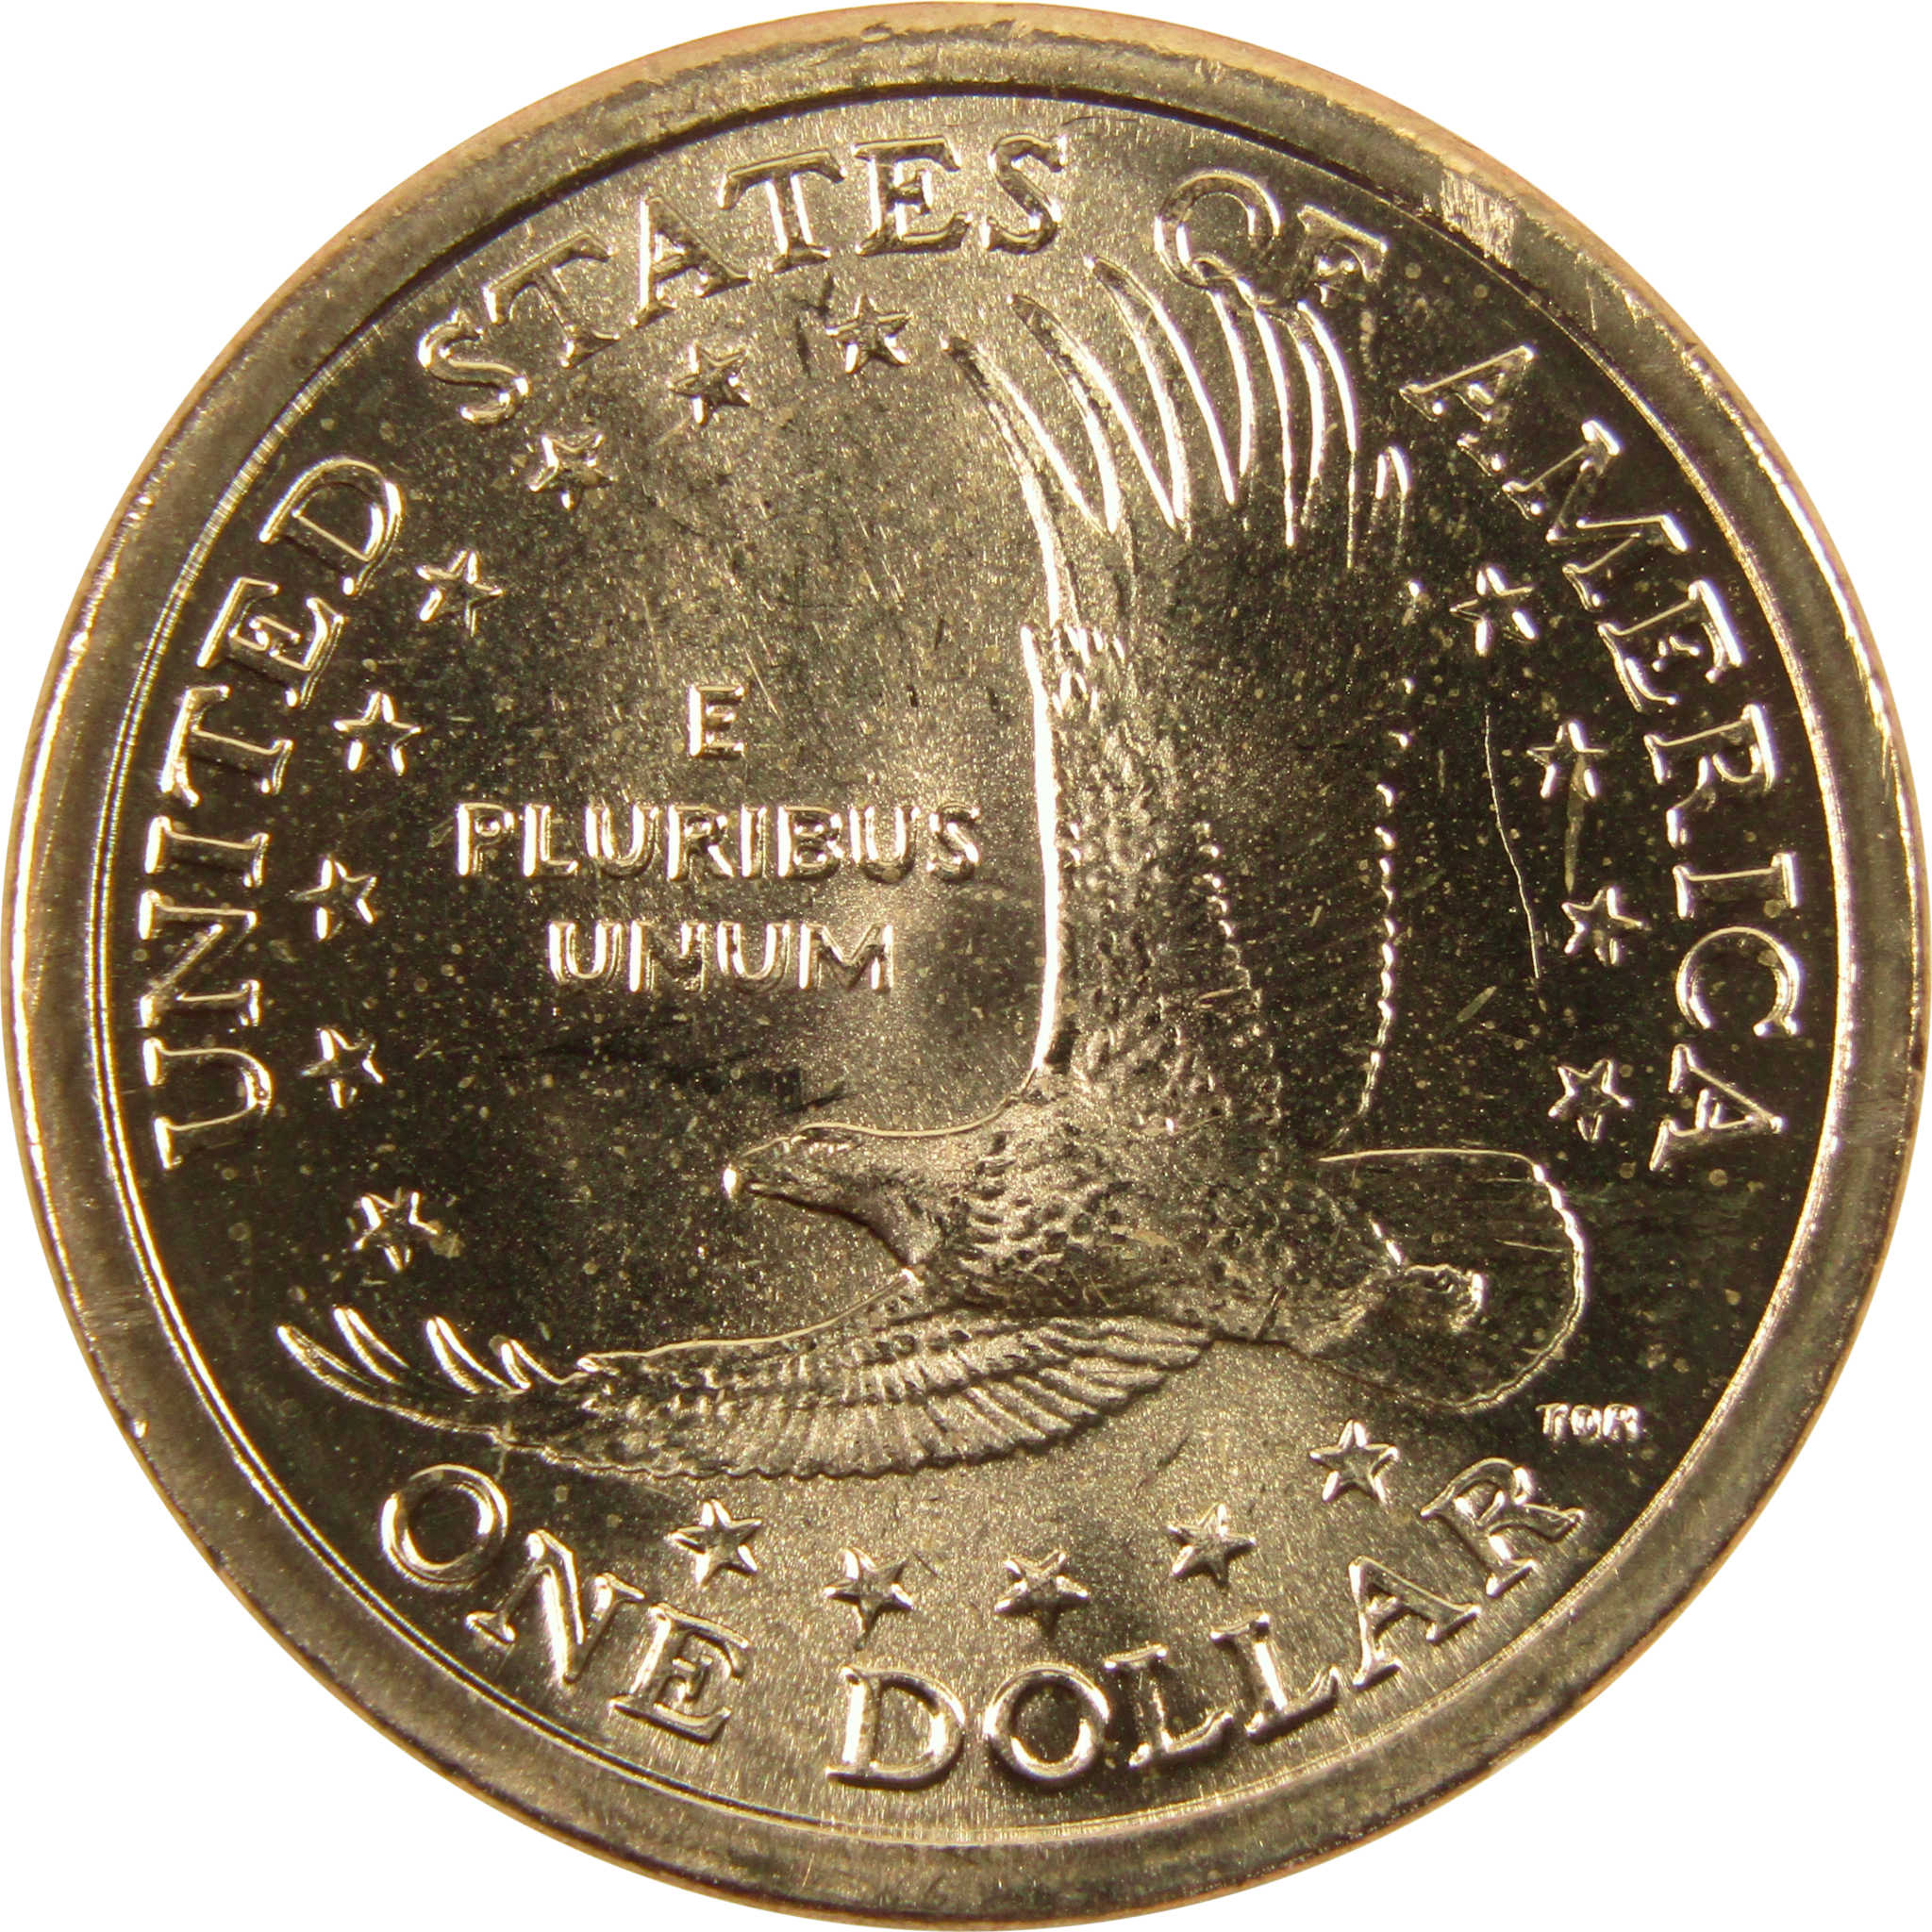 2006 D Sacagawea Native American Dollar BU Uncirculated $1 Coin